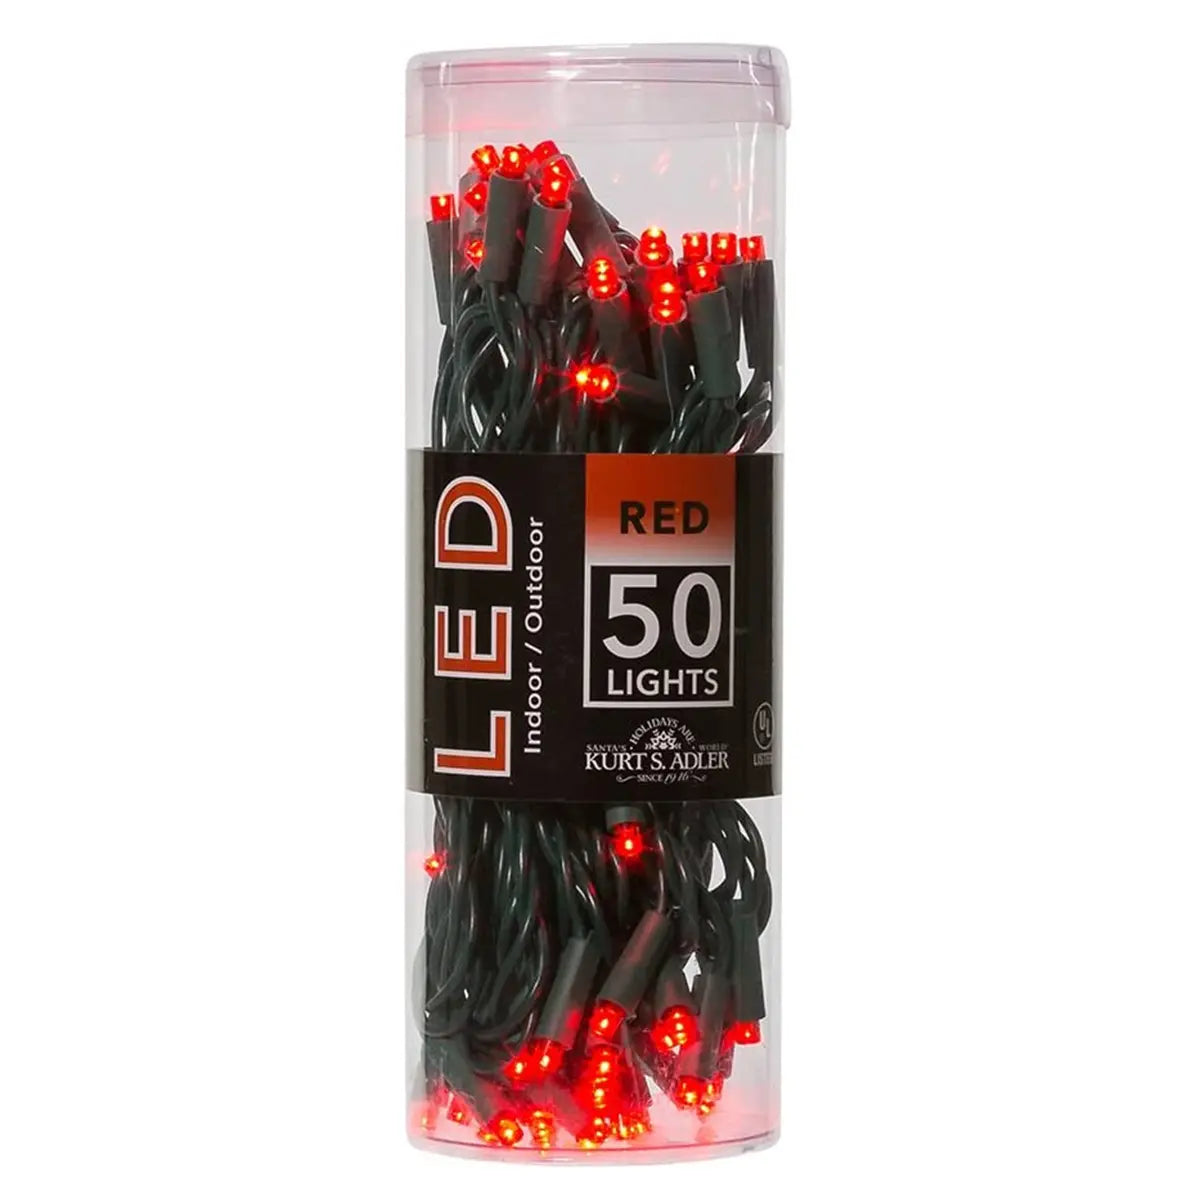 Kurt Adler UL 50 lights Red Led with Green Wire Set